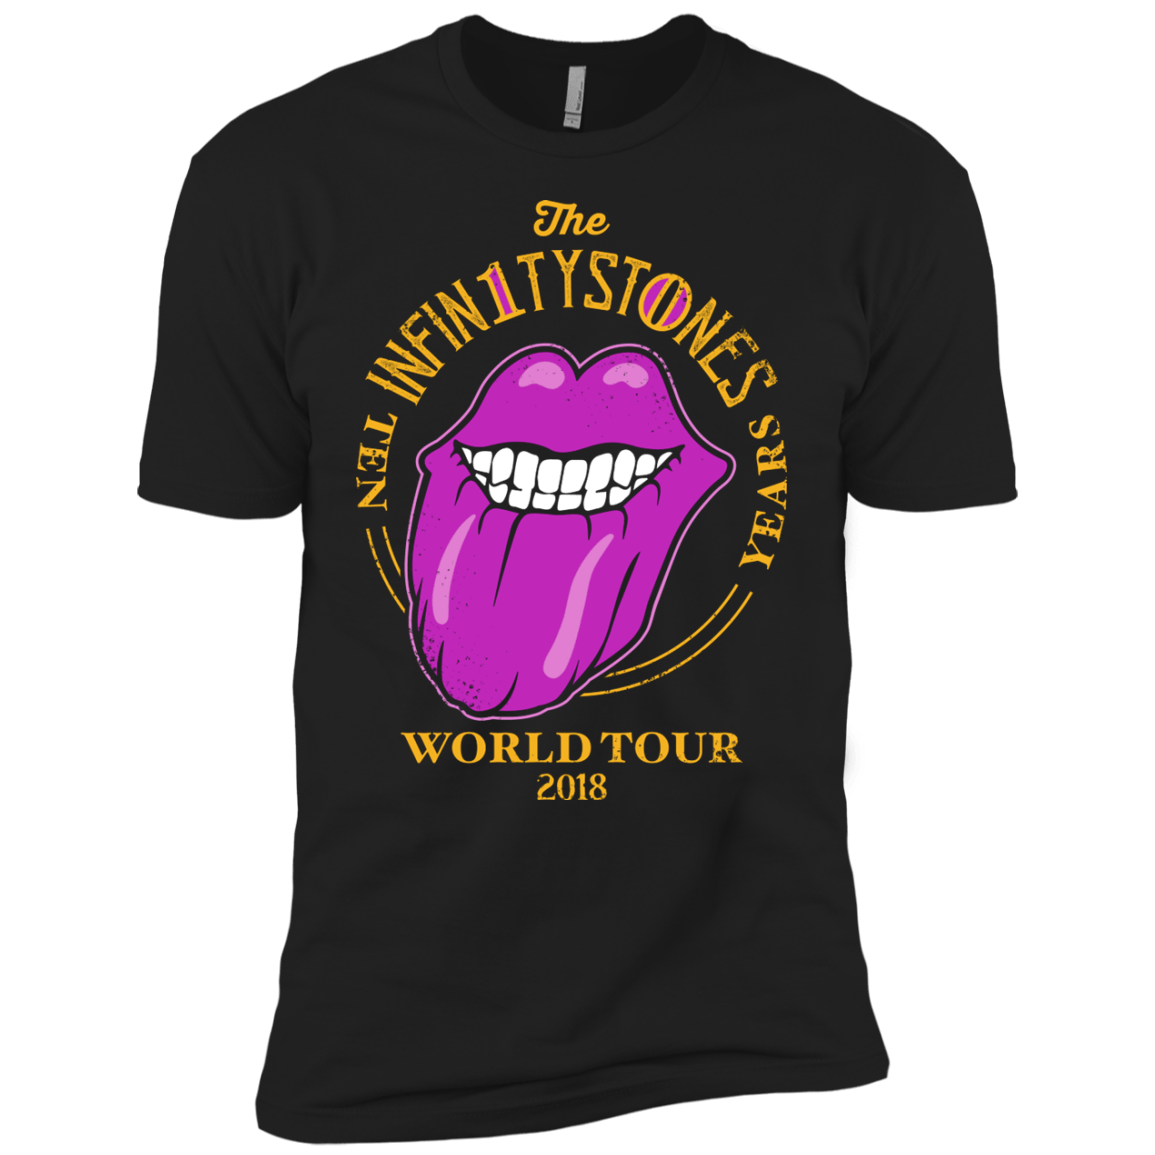 Stones World Tour Boys Premium T-Shirt